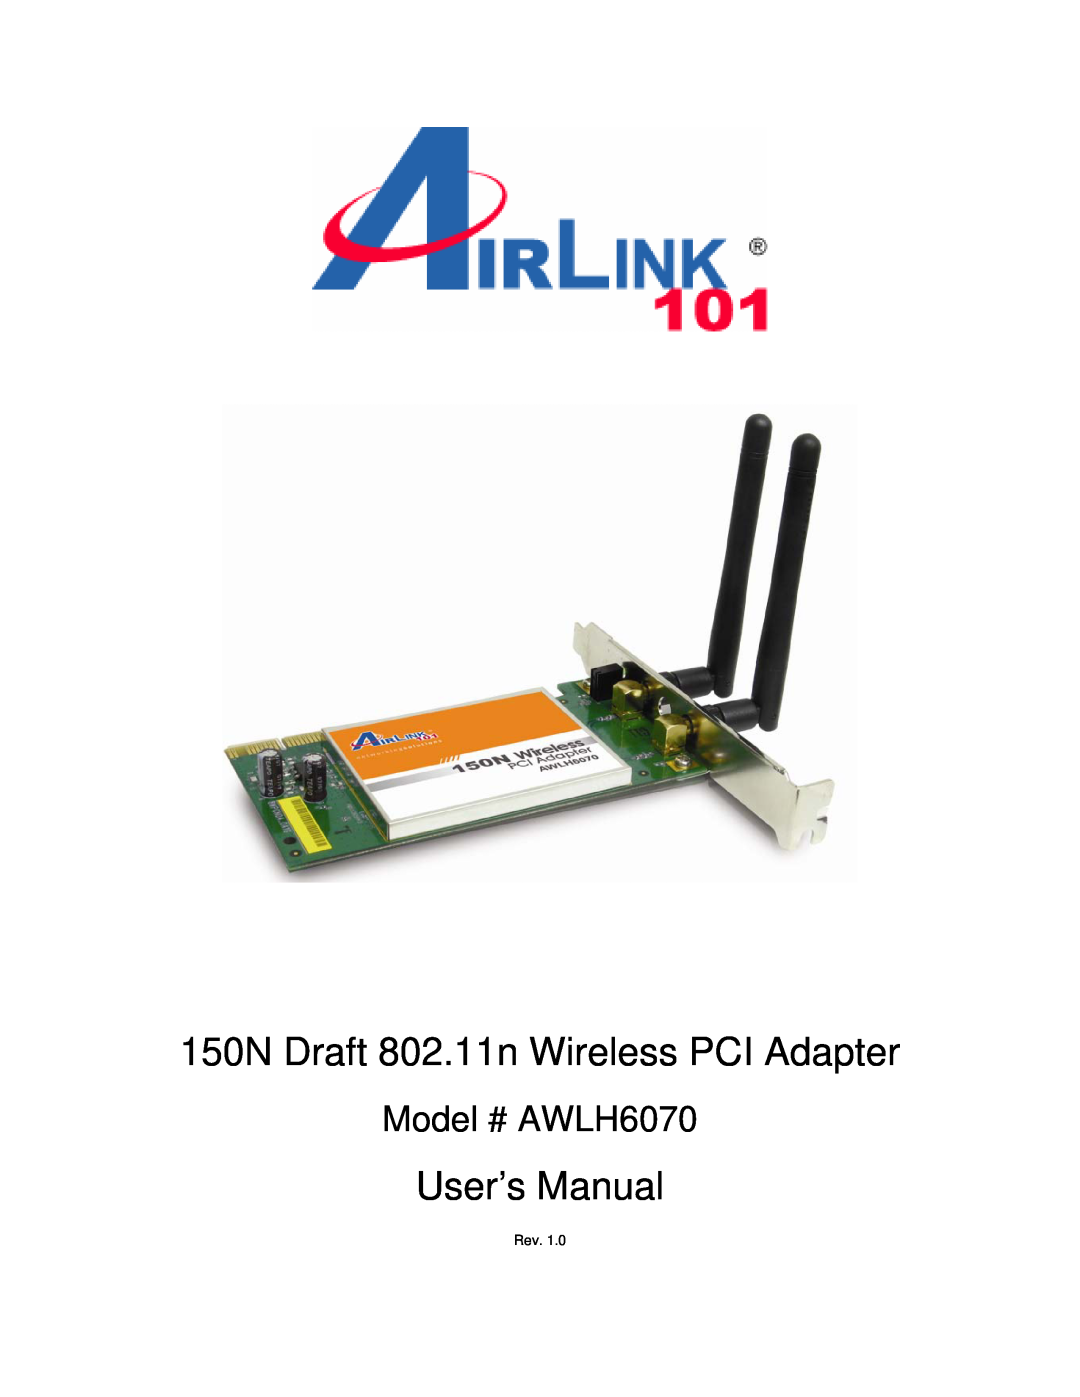 Airlink101 user manual 150N Draft 802.11n Wireless PCI Adapter, User’s Manual, Model # AWLH6070 